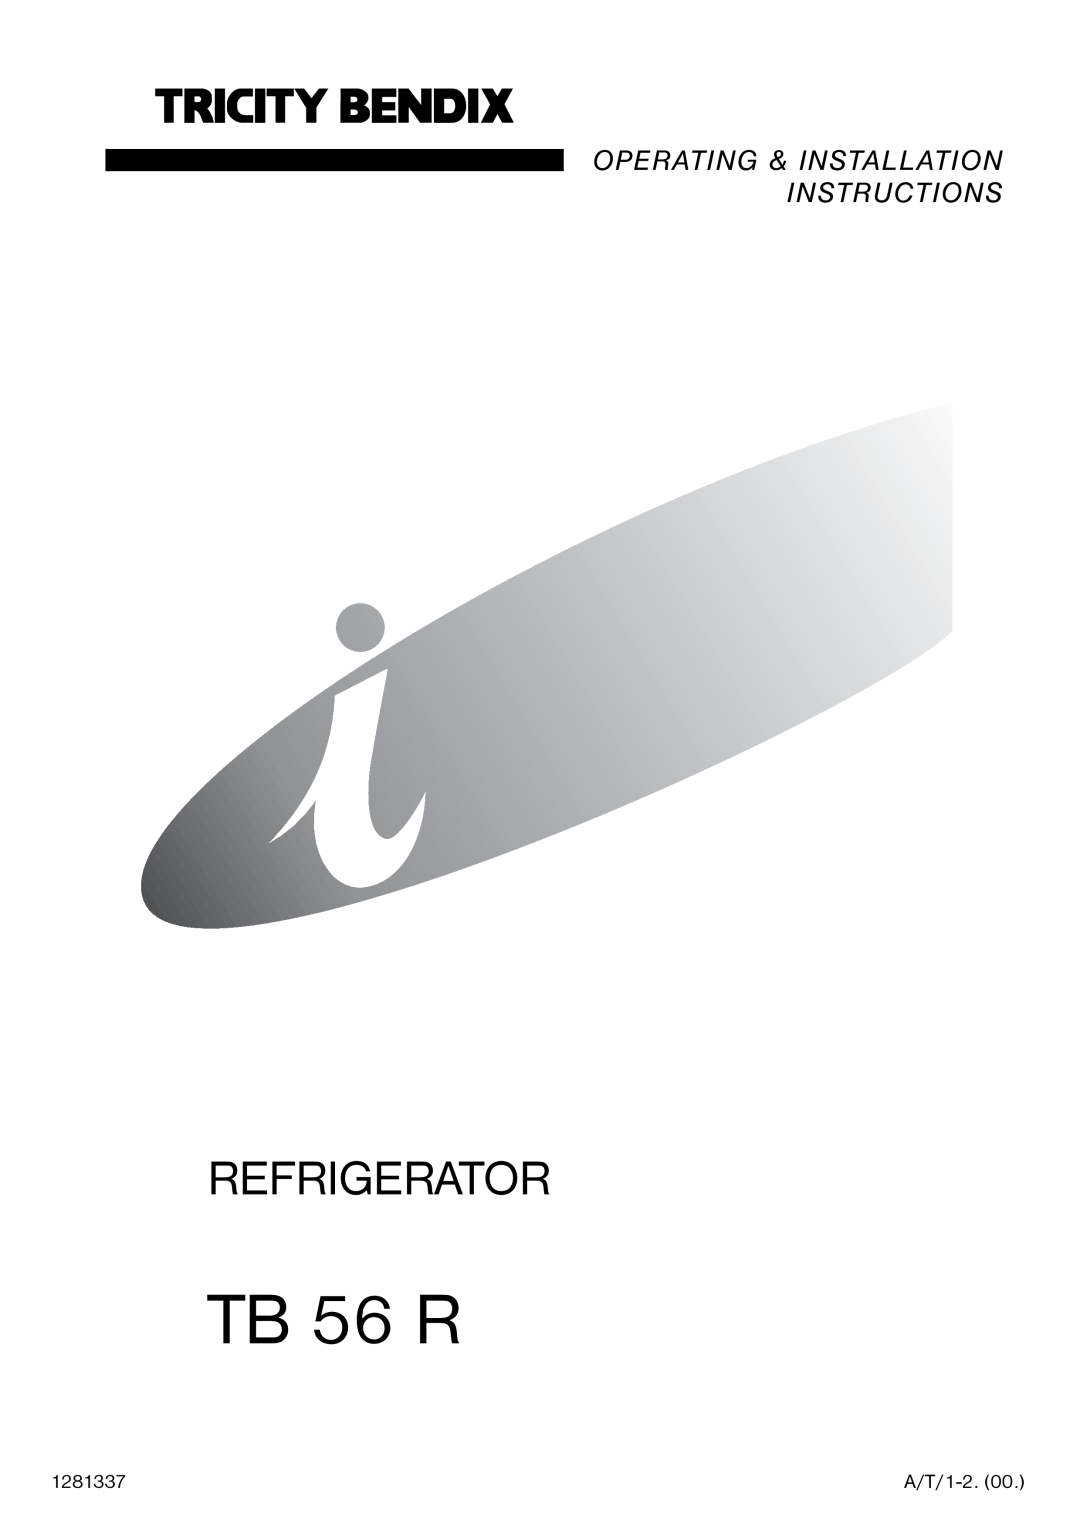 Tricity Bendix TB 56 R installation instructions Refrigerator, Operating & Installation Instructions 